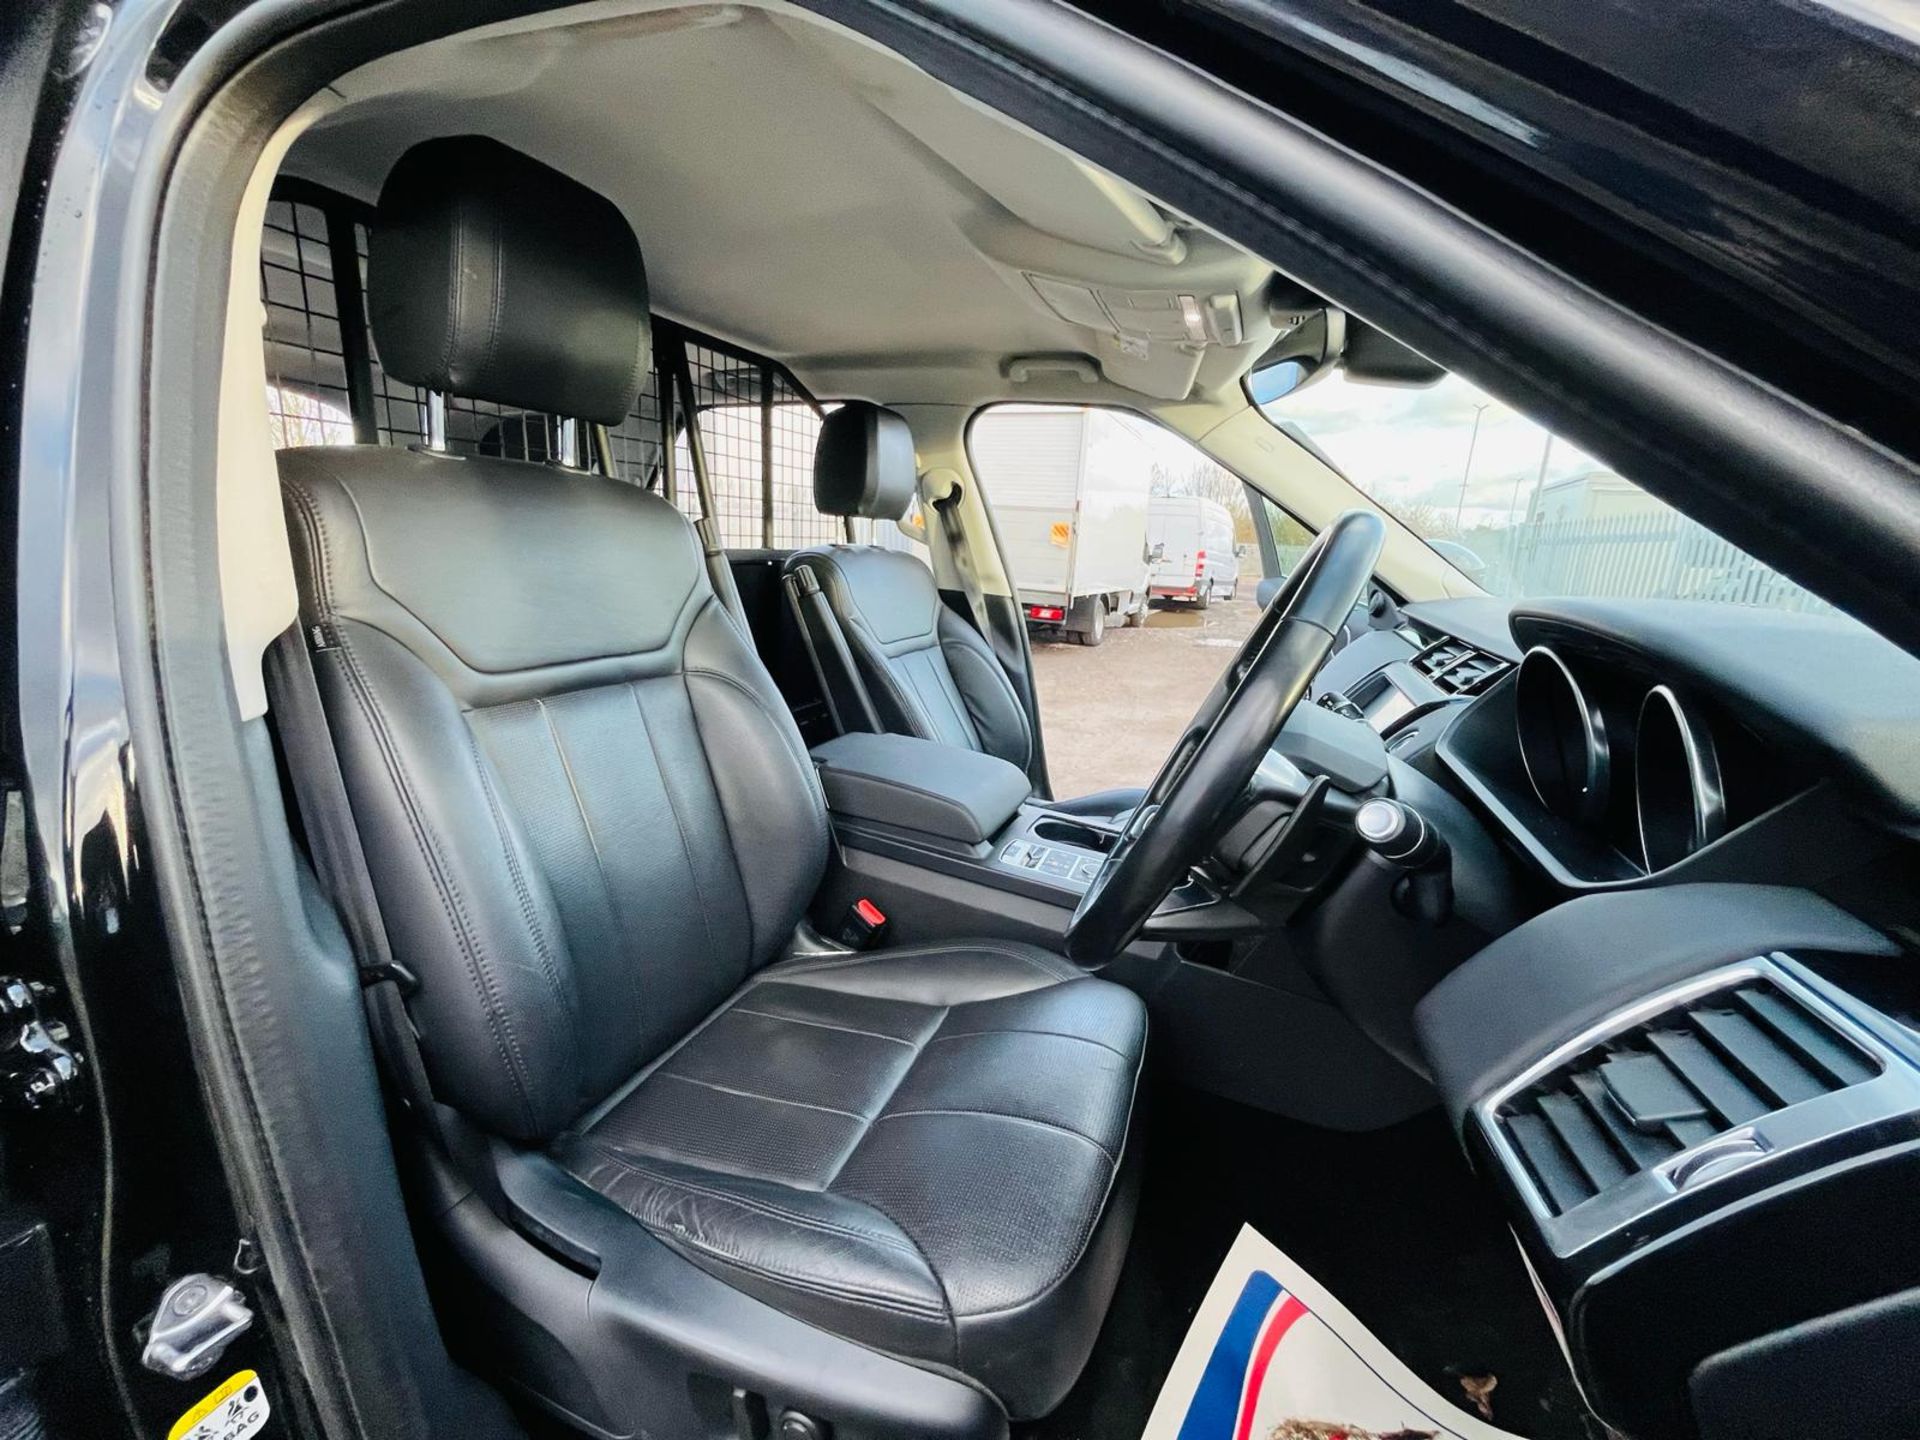 Land Rover Discovery 306 SE Van 3.0 SD6 2019 '19 Reg' - A/C-Navigation-Alloy Wheels- ULEZ Compliant - Image 13 of 31